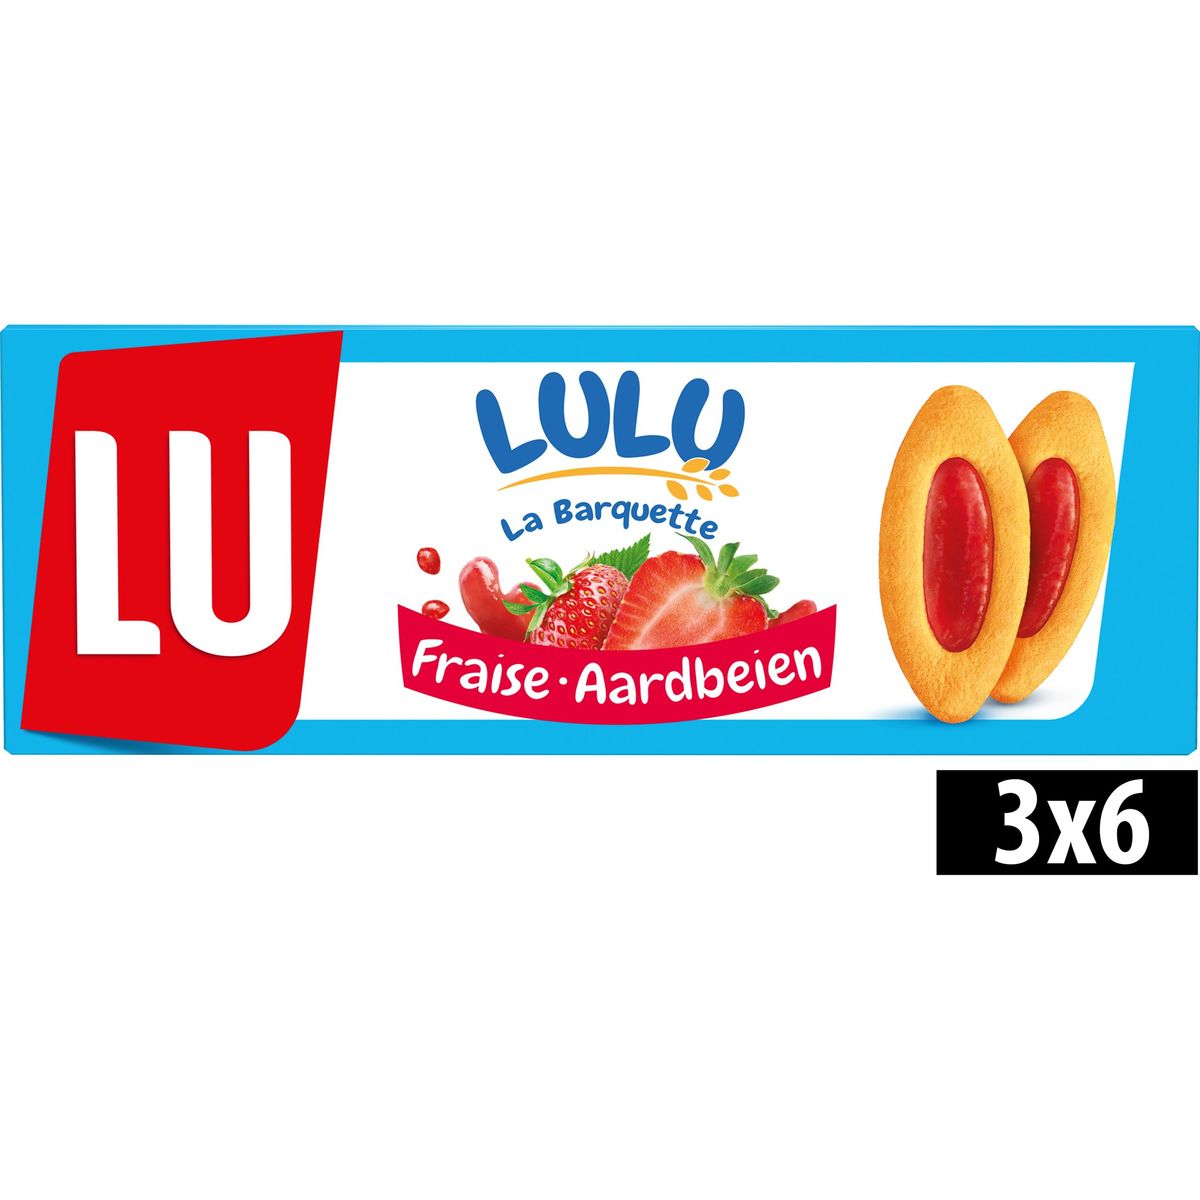 Barquettes Lulu fraise LU 120g